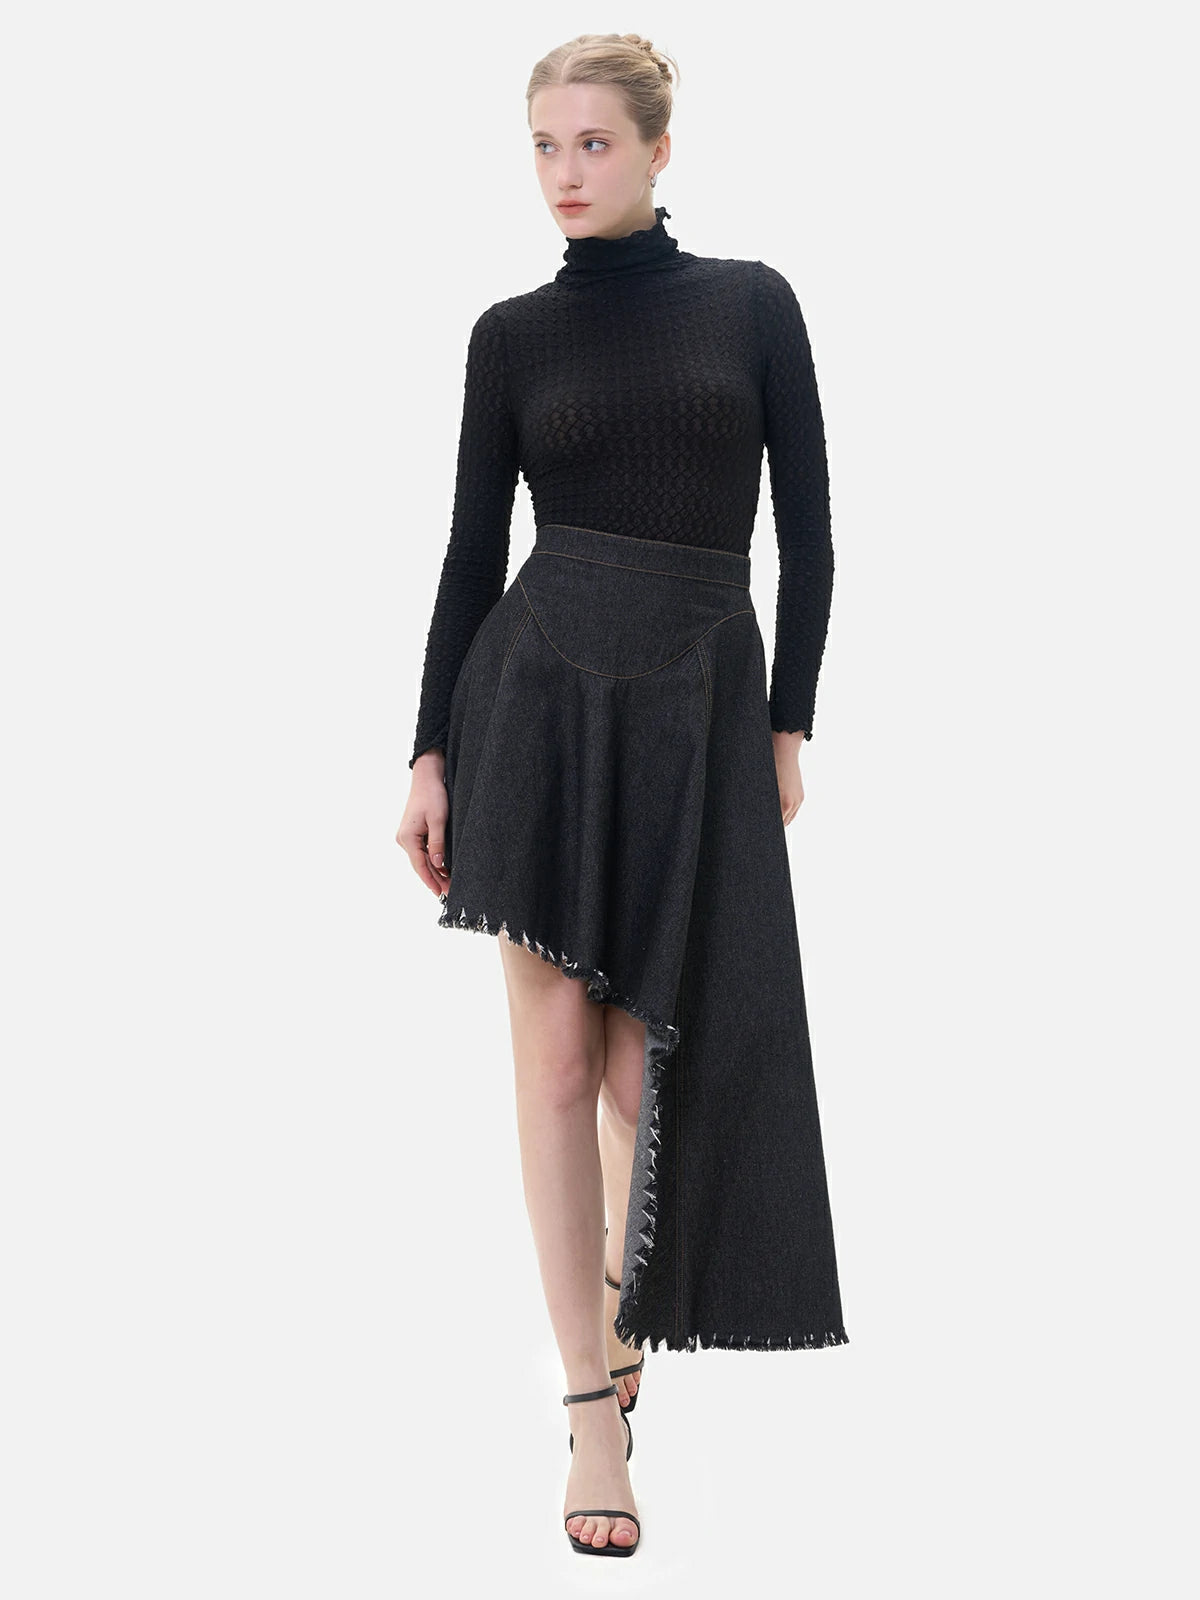 Denim skirt with unique frayed edge design